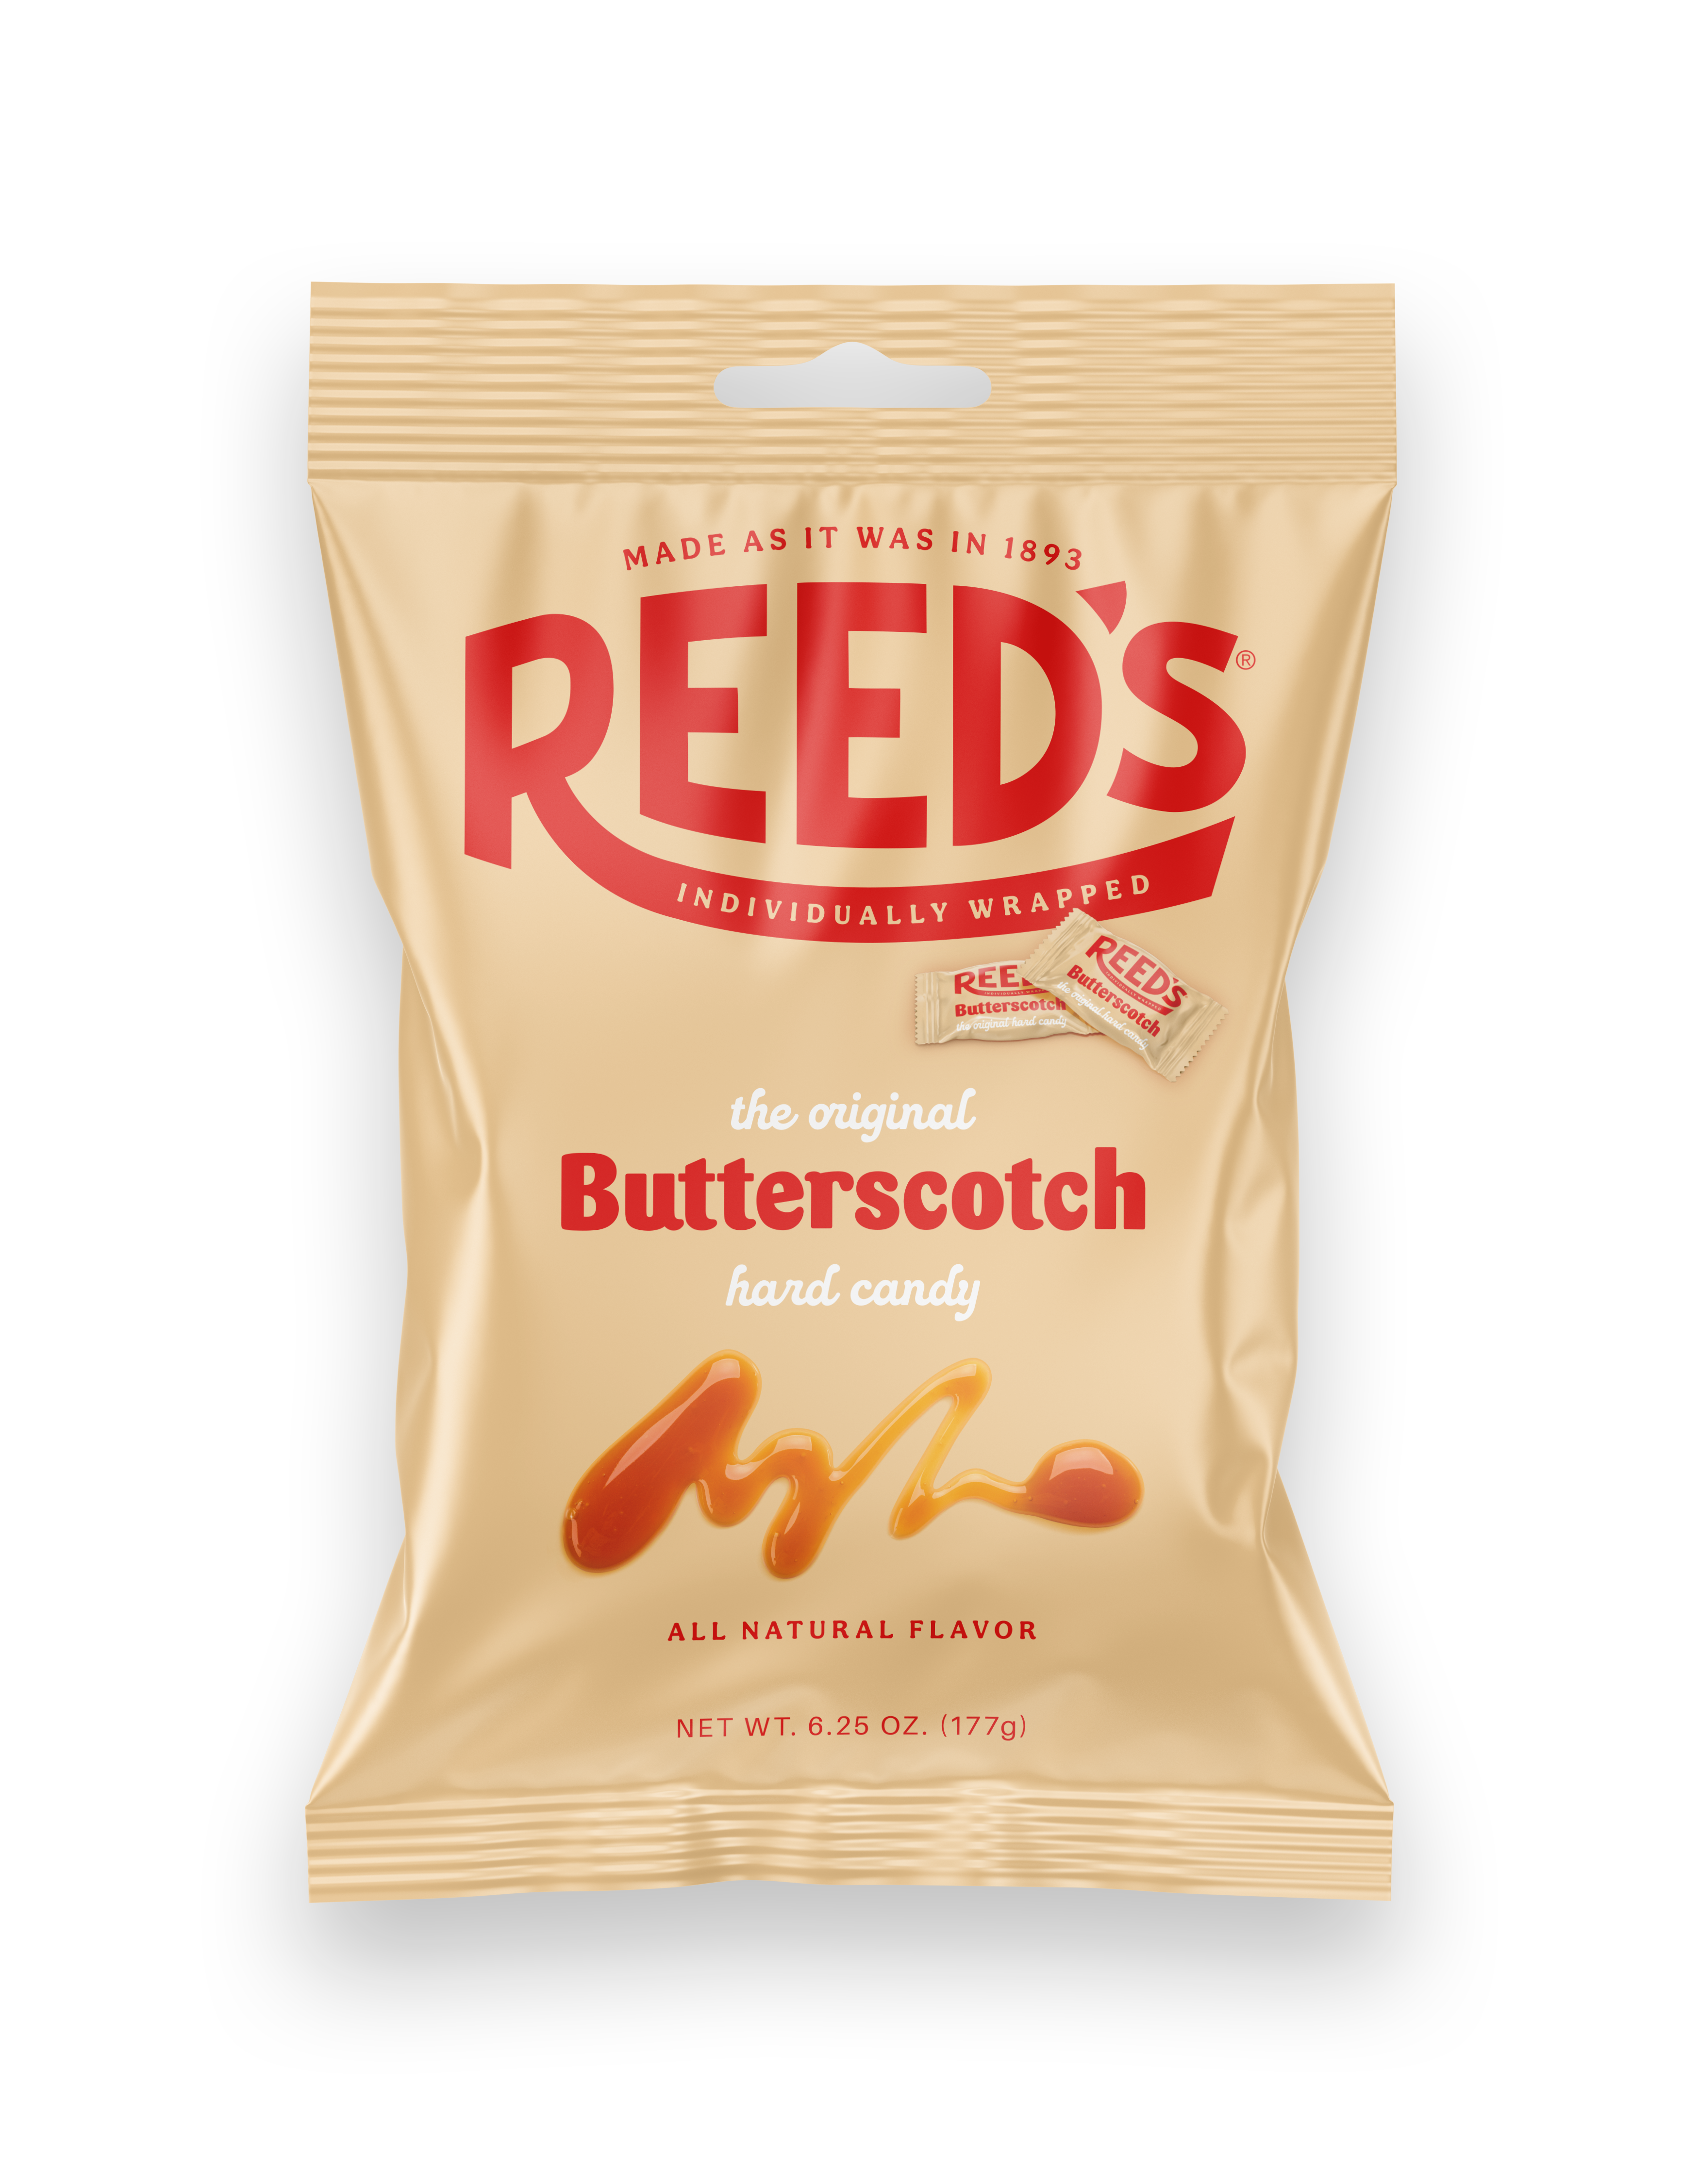 REED'S BUTTERSCOTCH